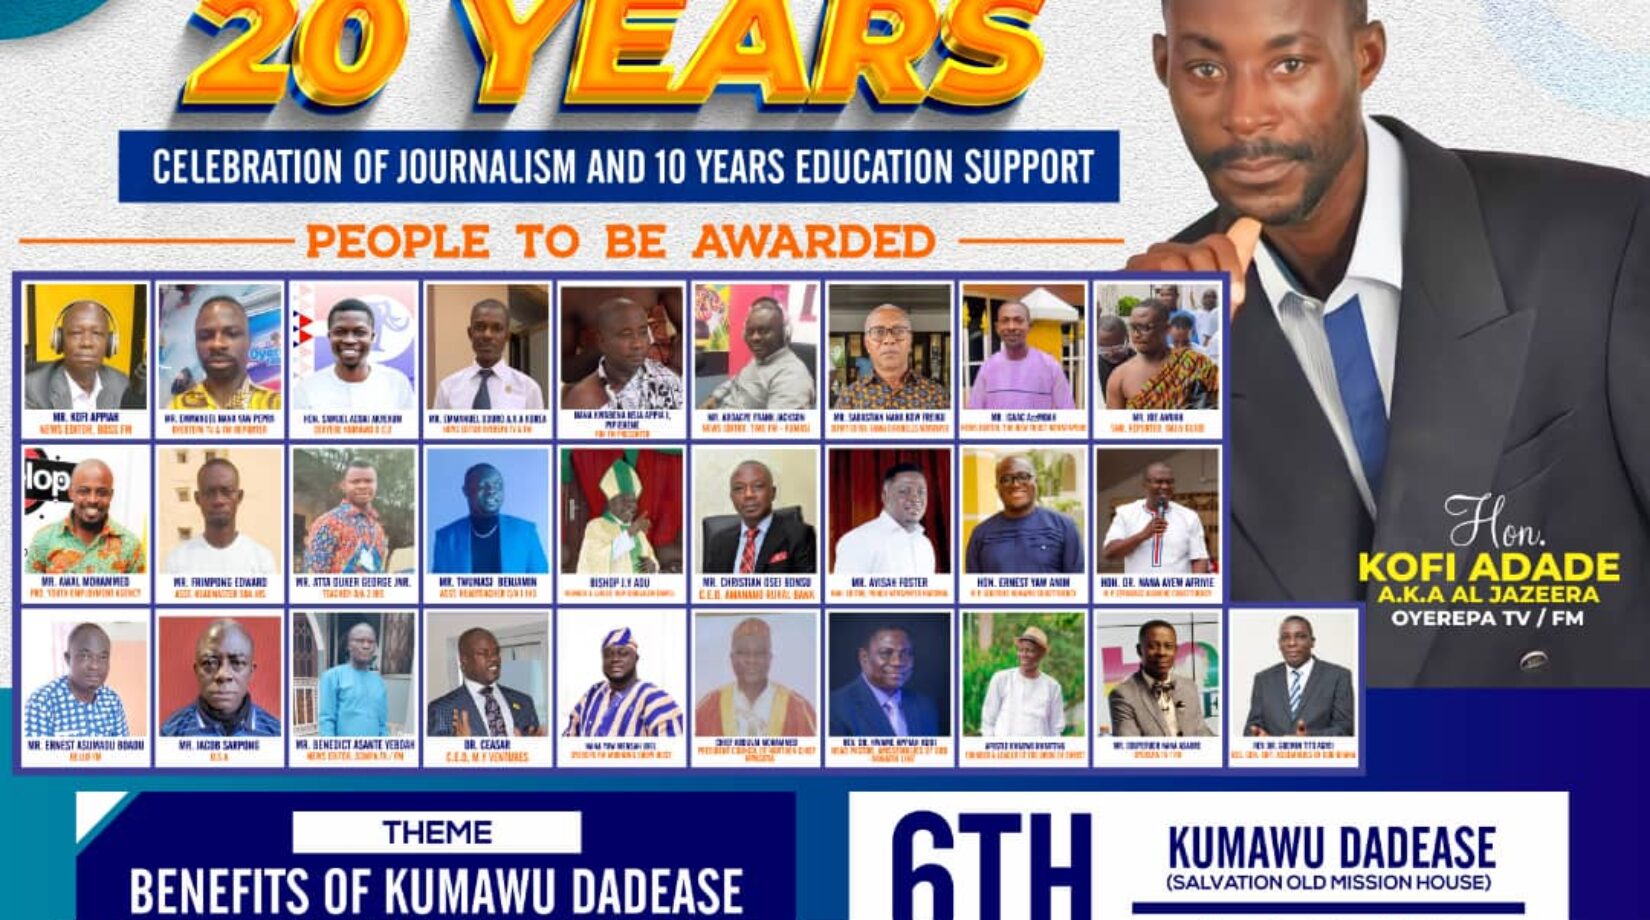 Kumawu-Dadease community has benefited massively from my 20 years as a journalist, assembly member – Hon. Kofi Adade asserts